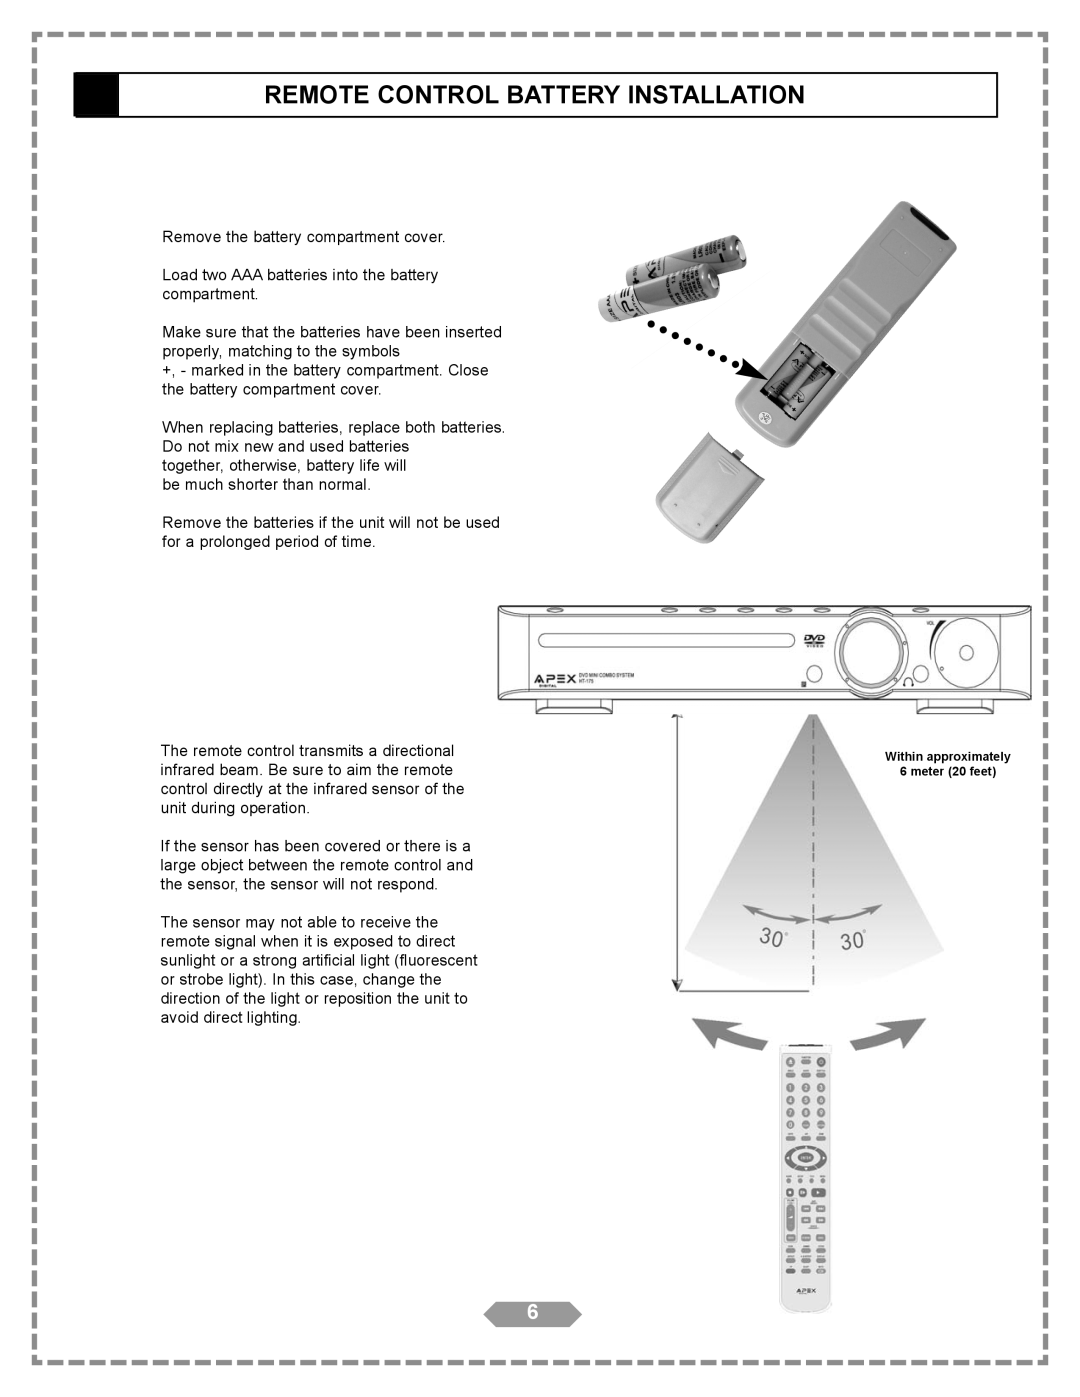 Apex Digital HT-175 manual Remote Control Battery Installation 